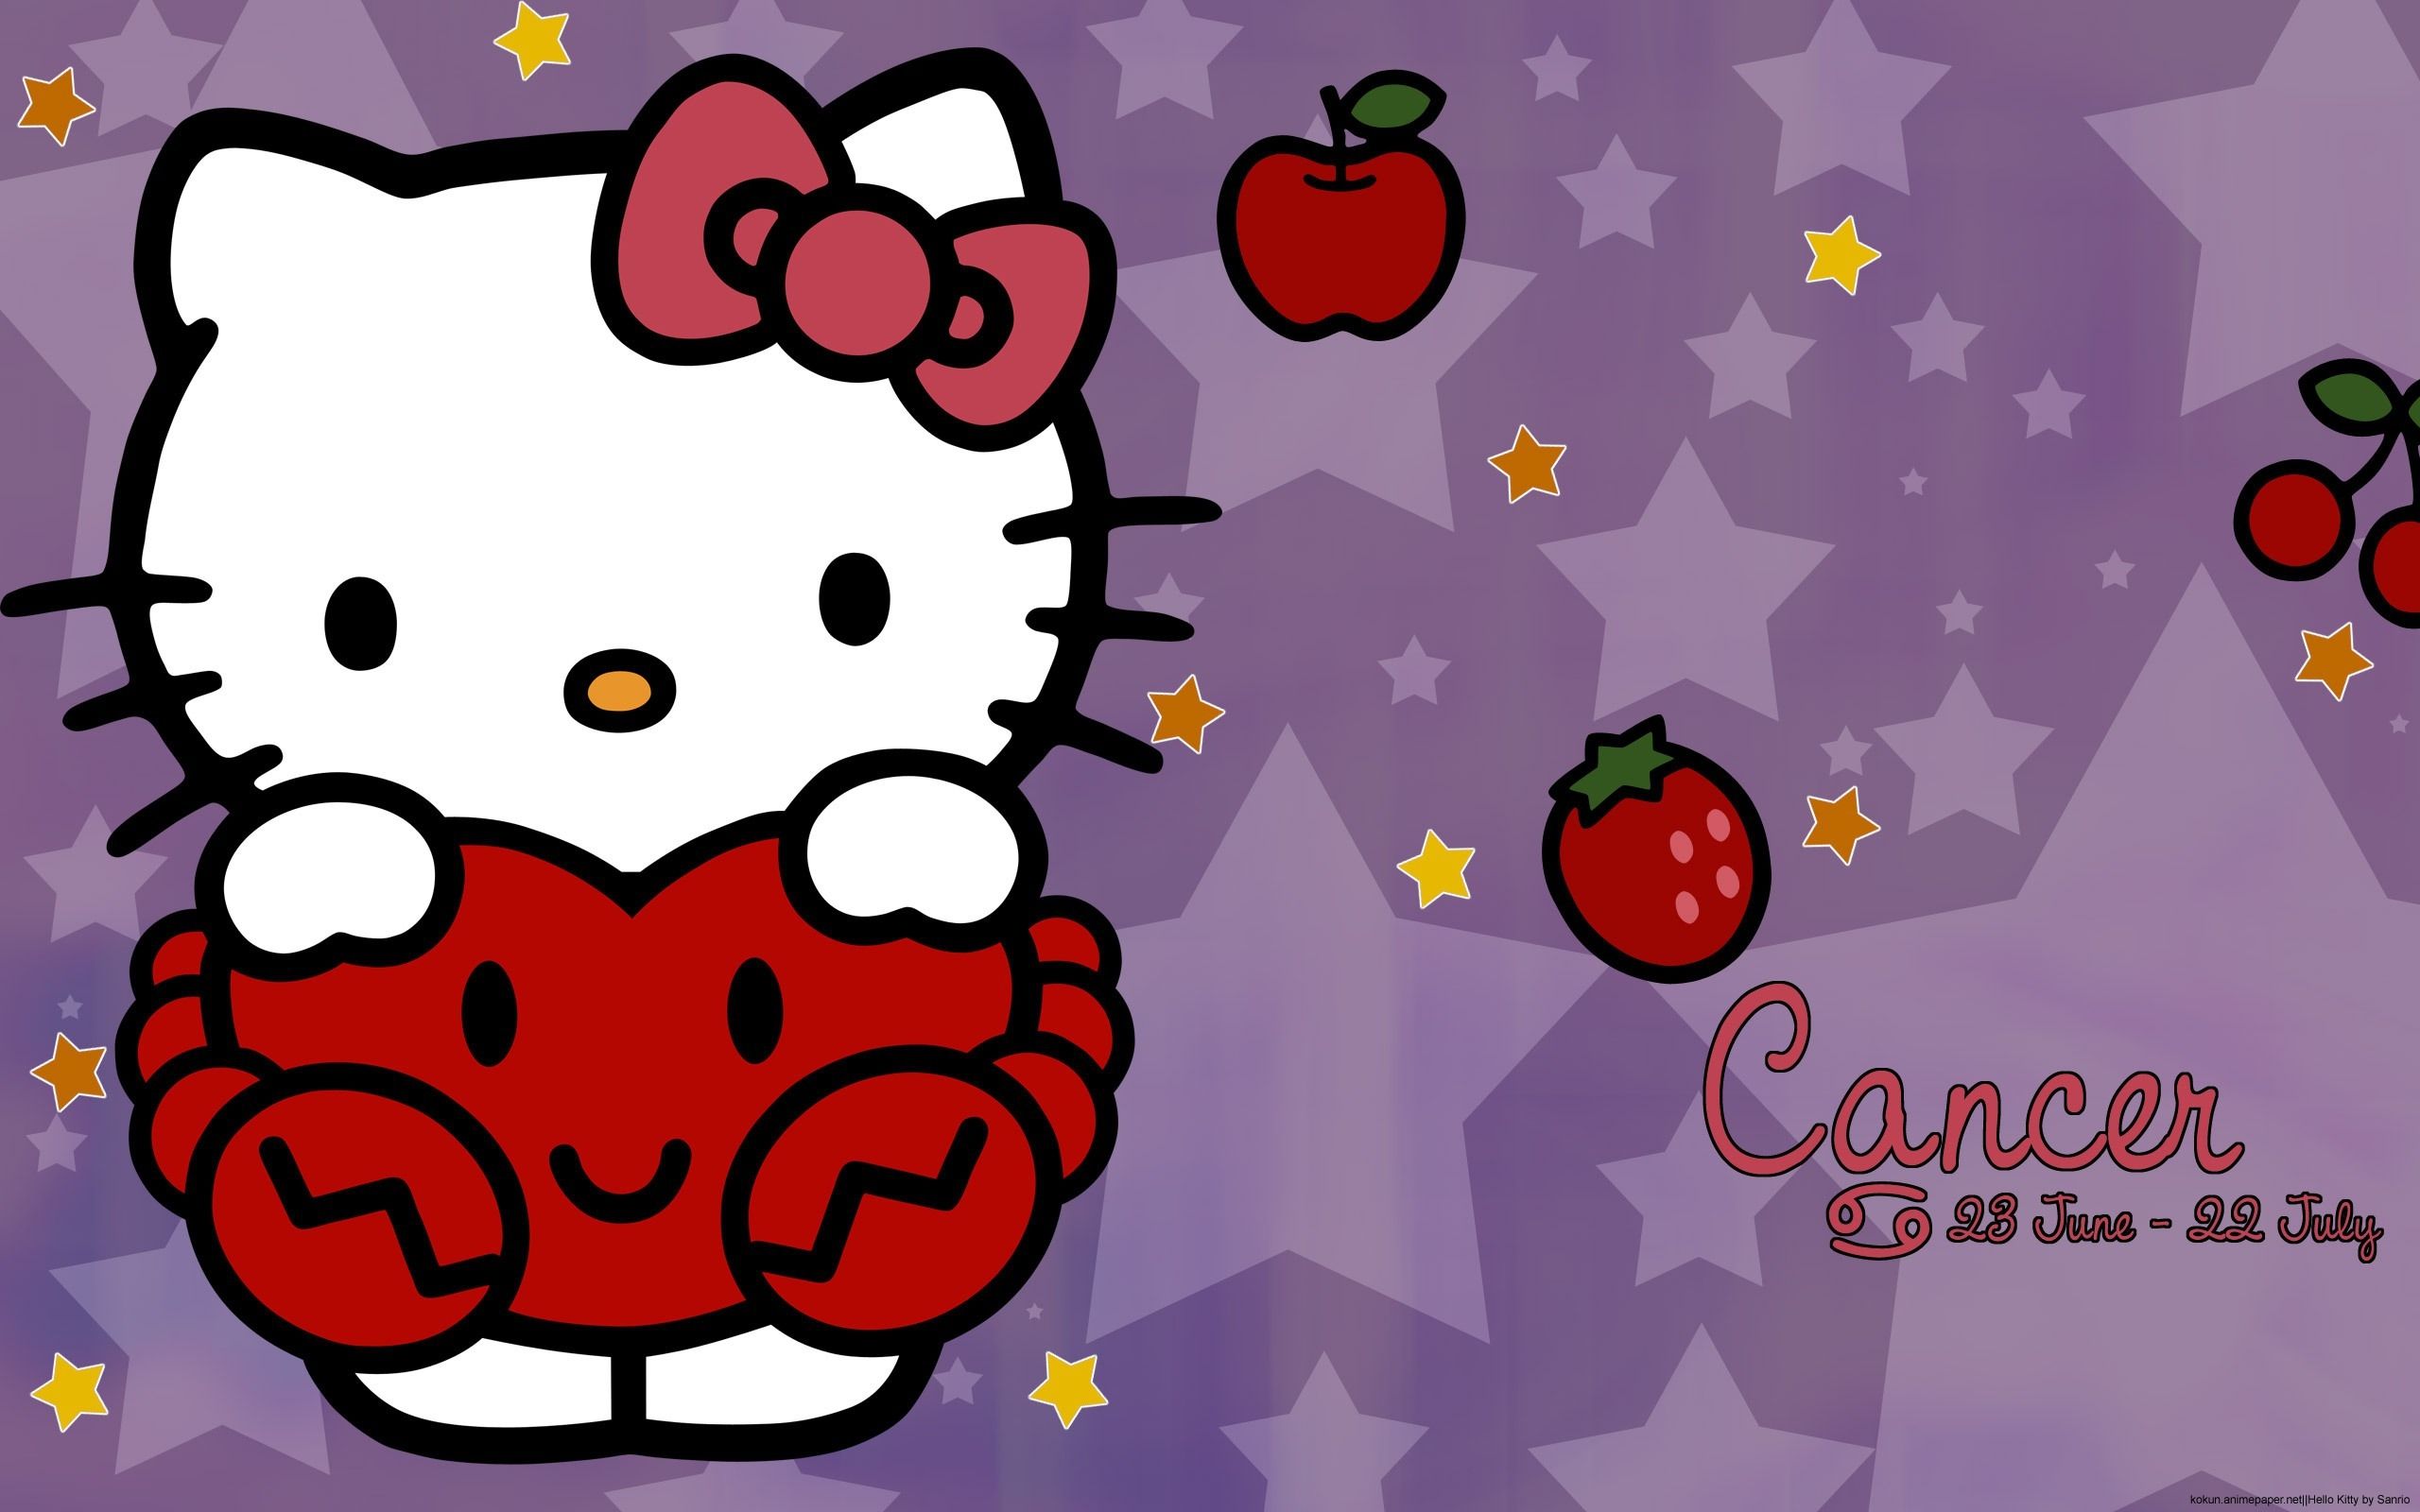 Hello Kitty Pink And Black Love Wallpaper Desktop Background ...